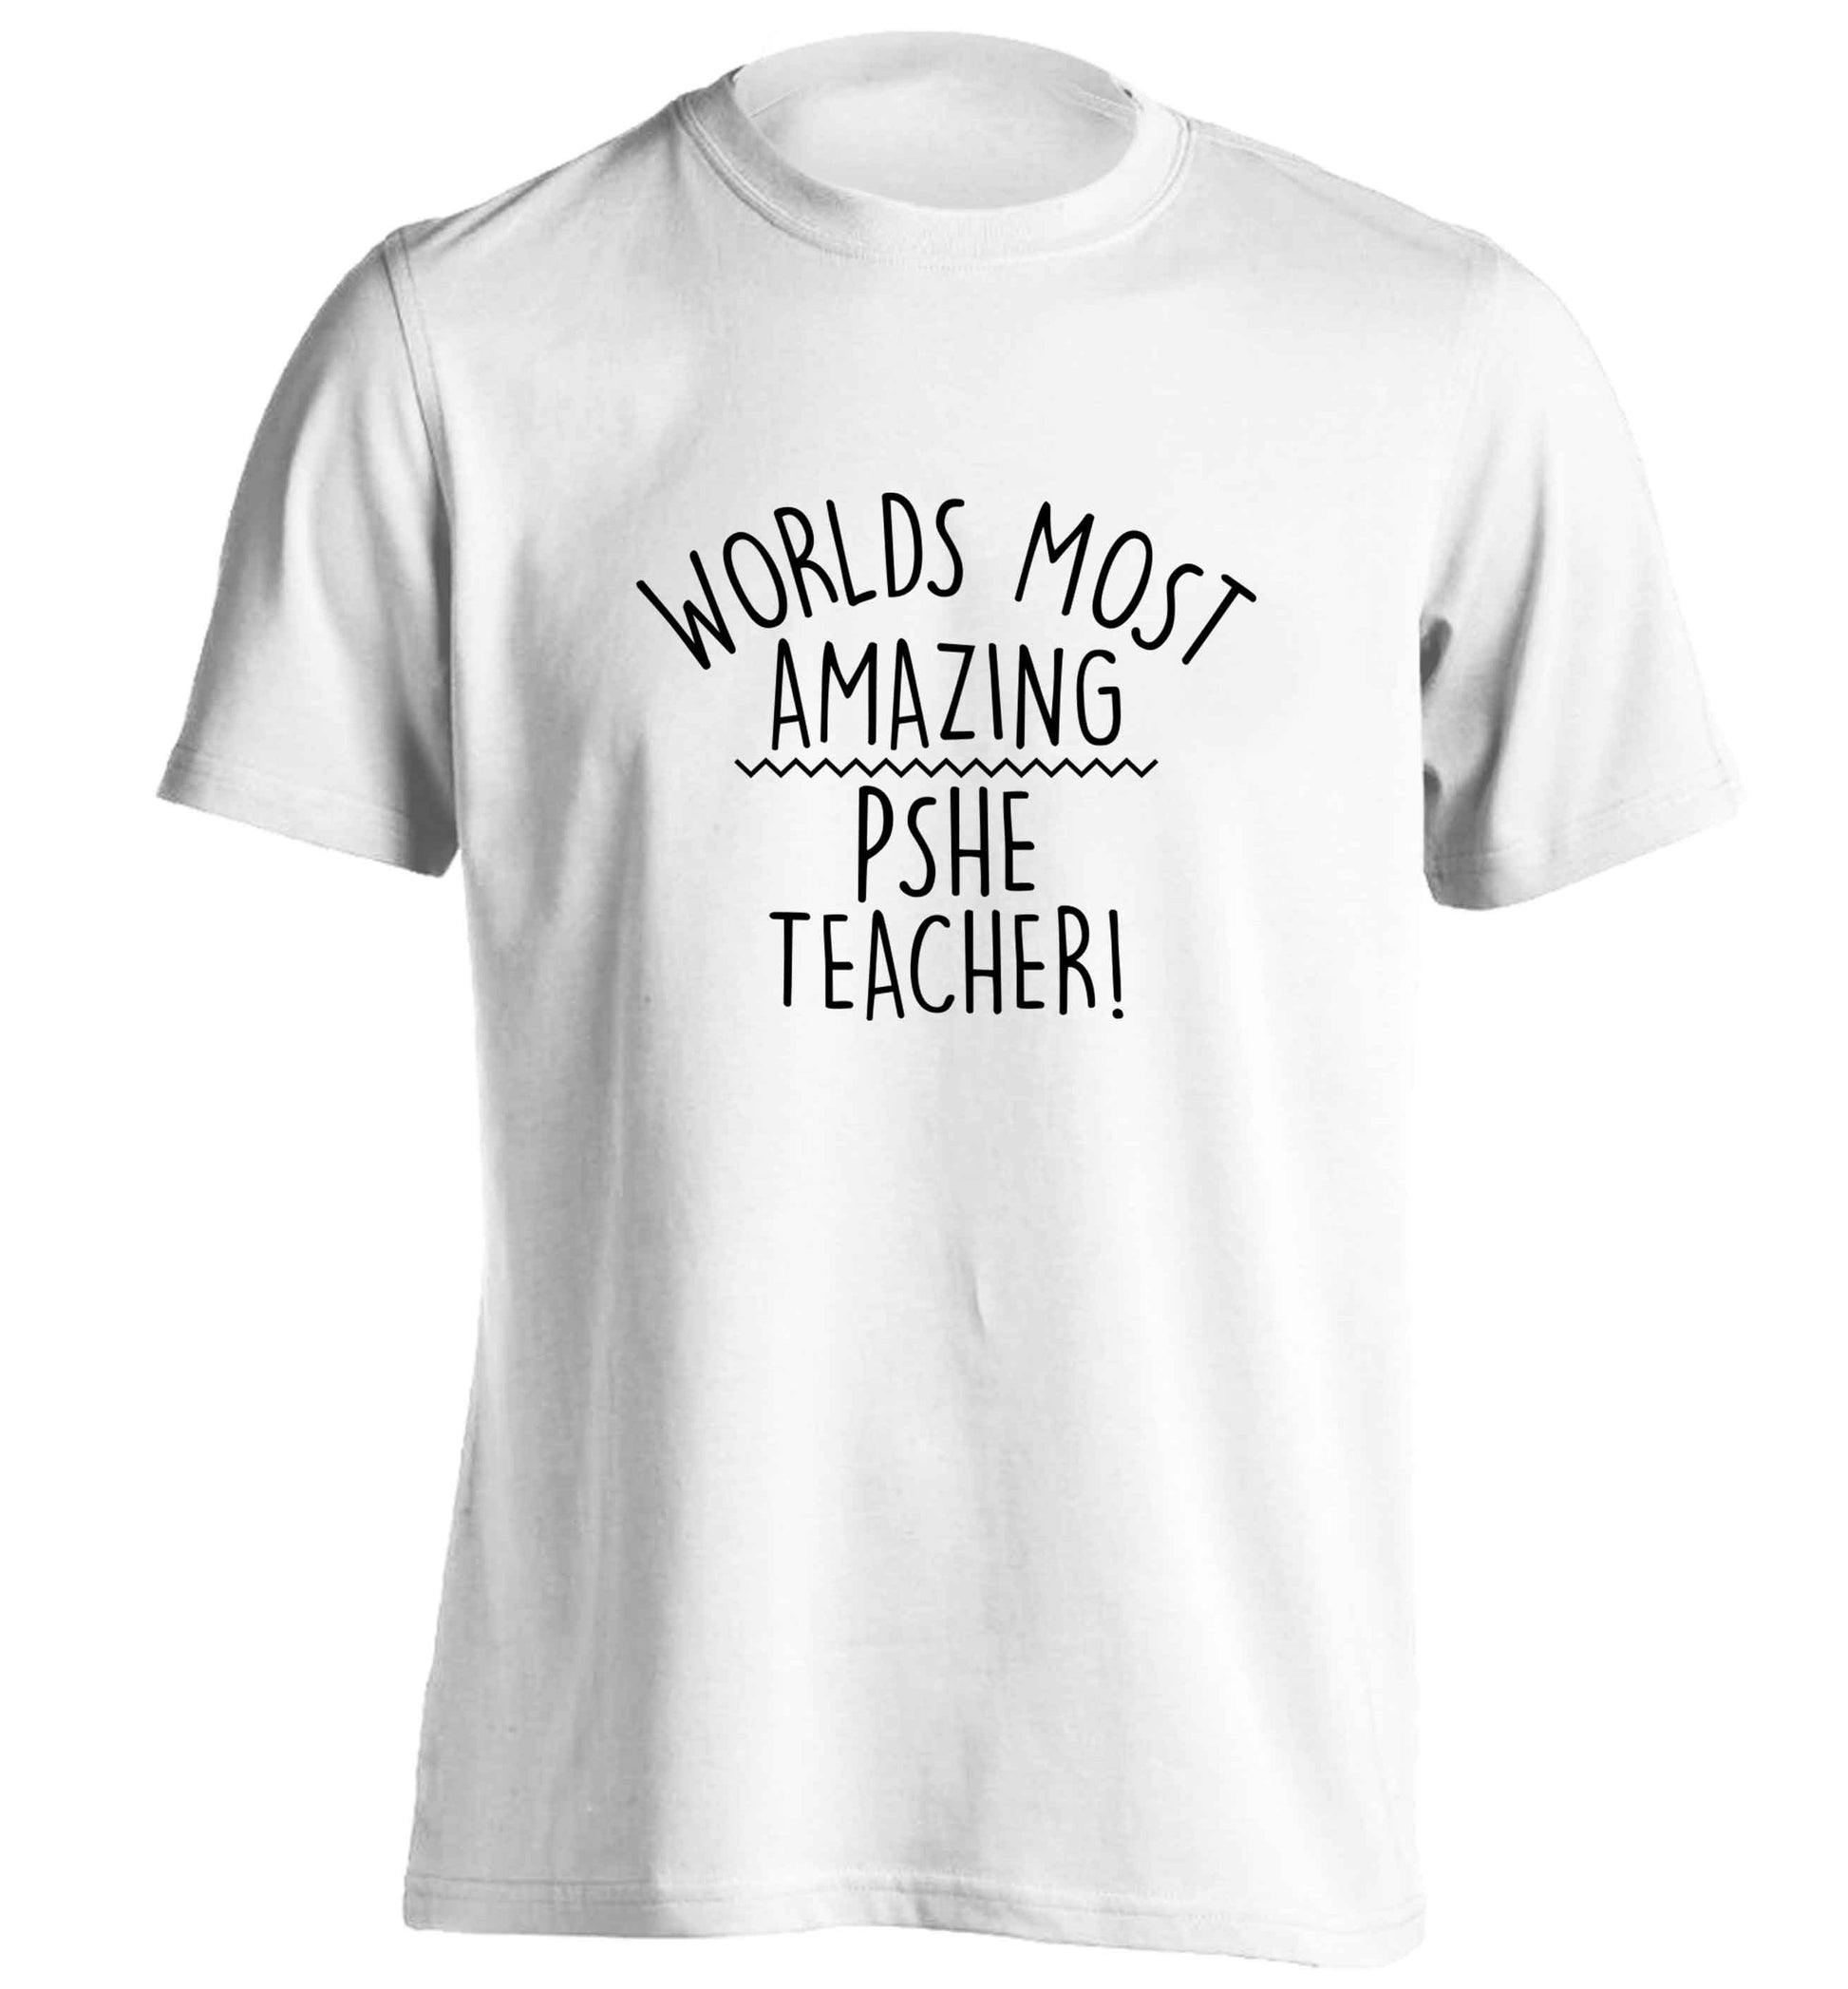 Worlds most amazing PHSE teacher adults unisex white Tshirt 2XL